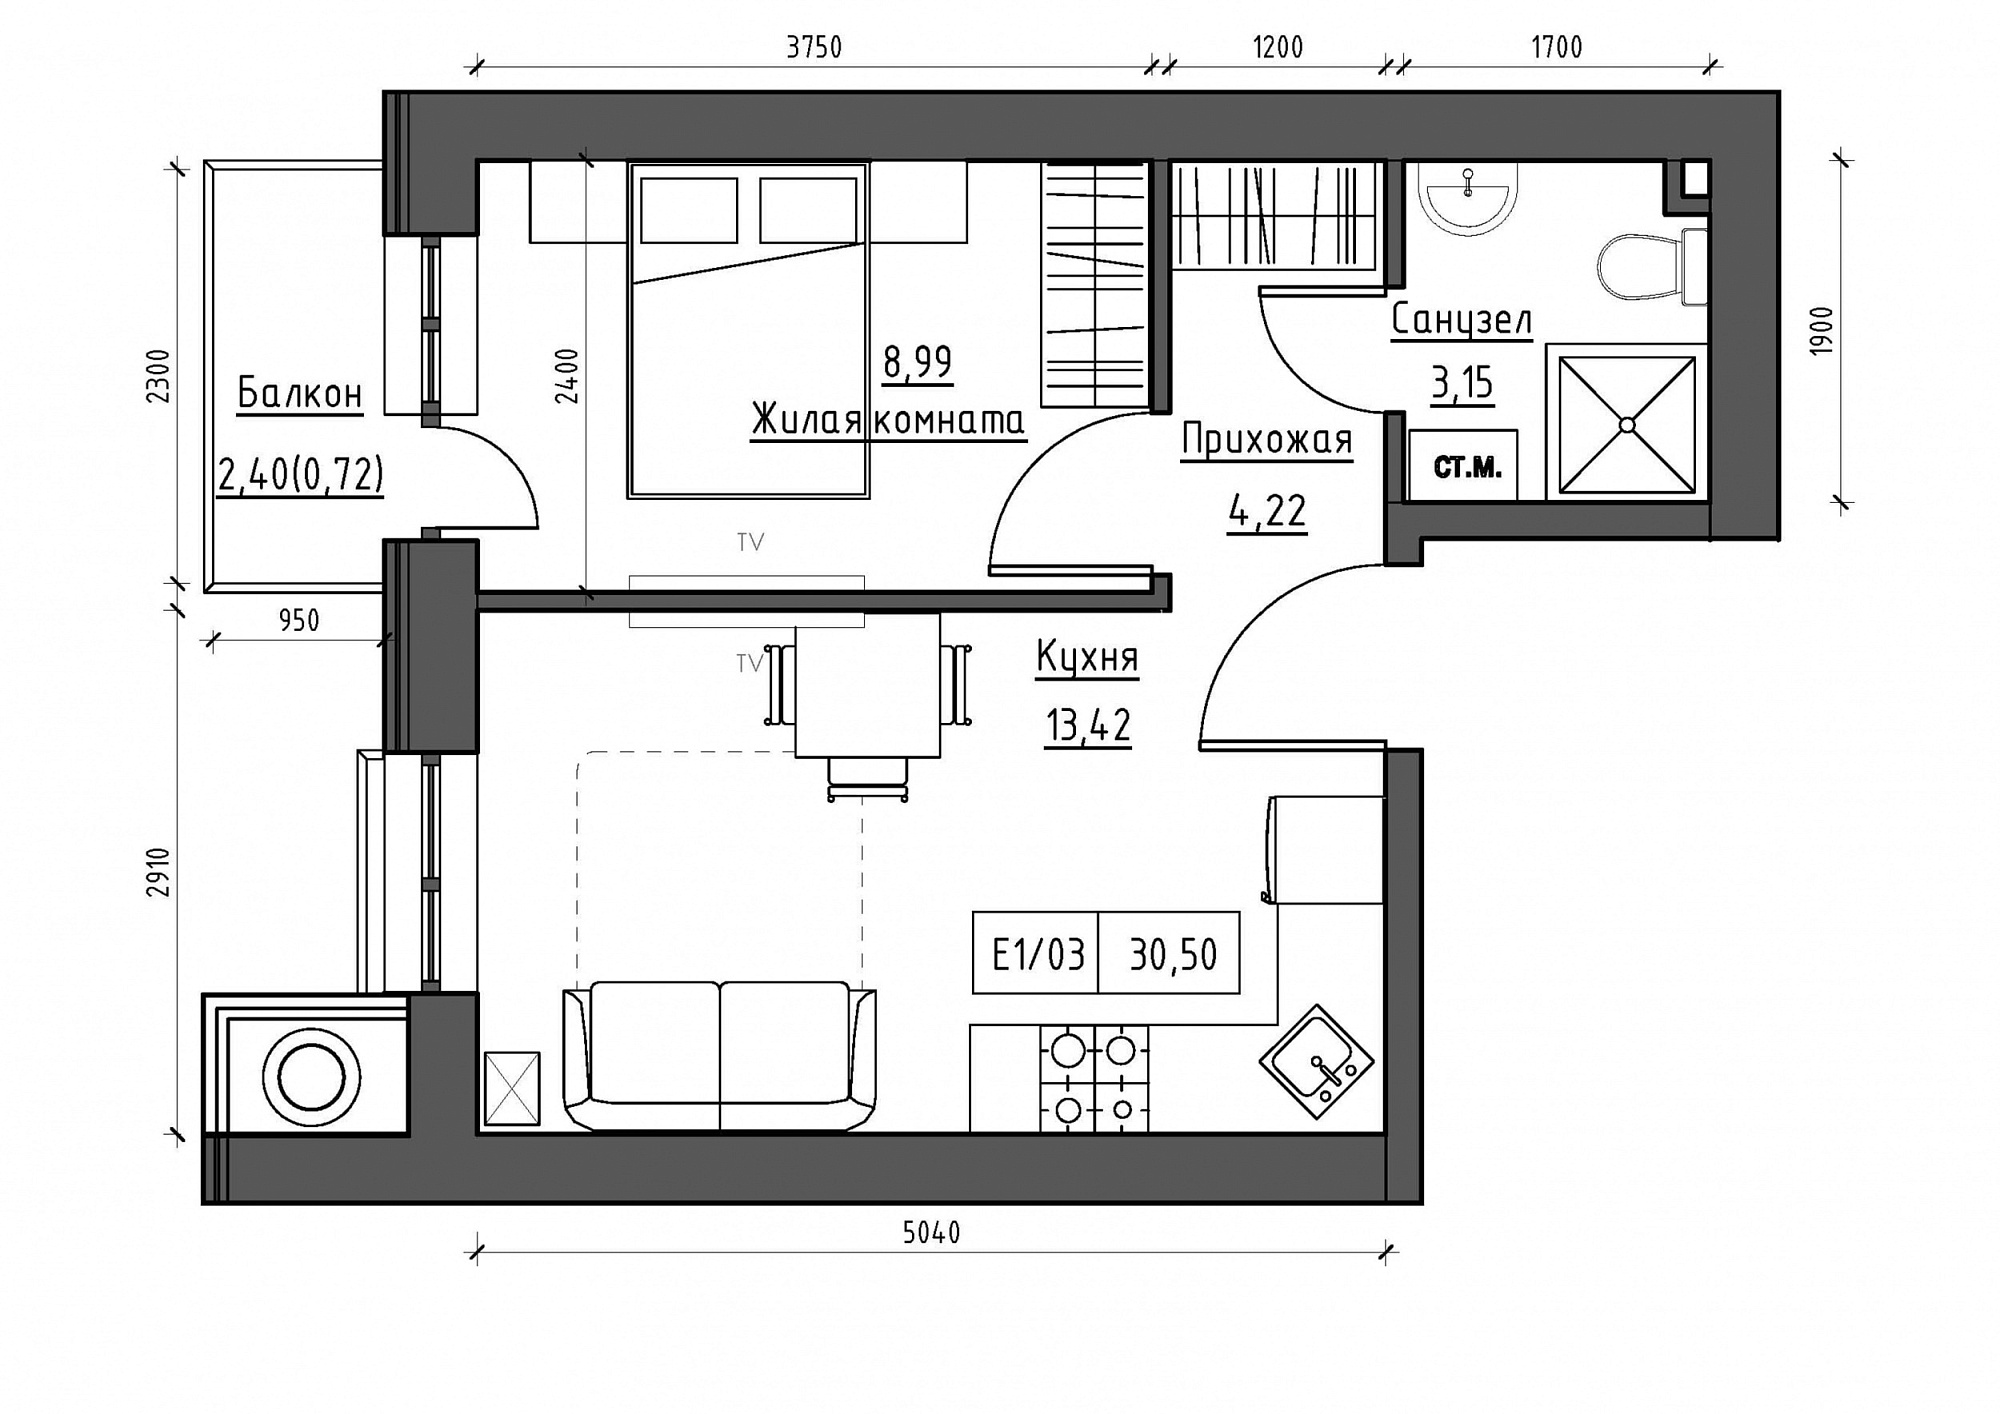 Planning 1-rm flats area 30.5m2, KS-011-05/0003.